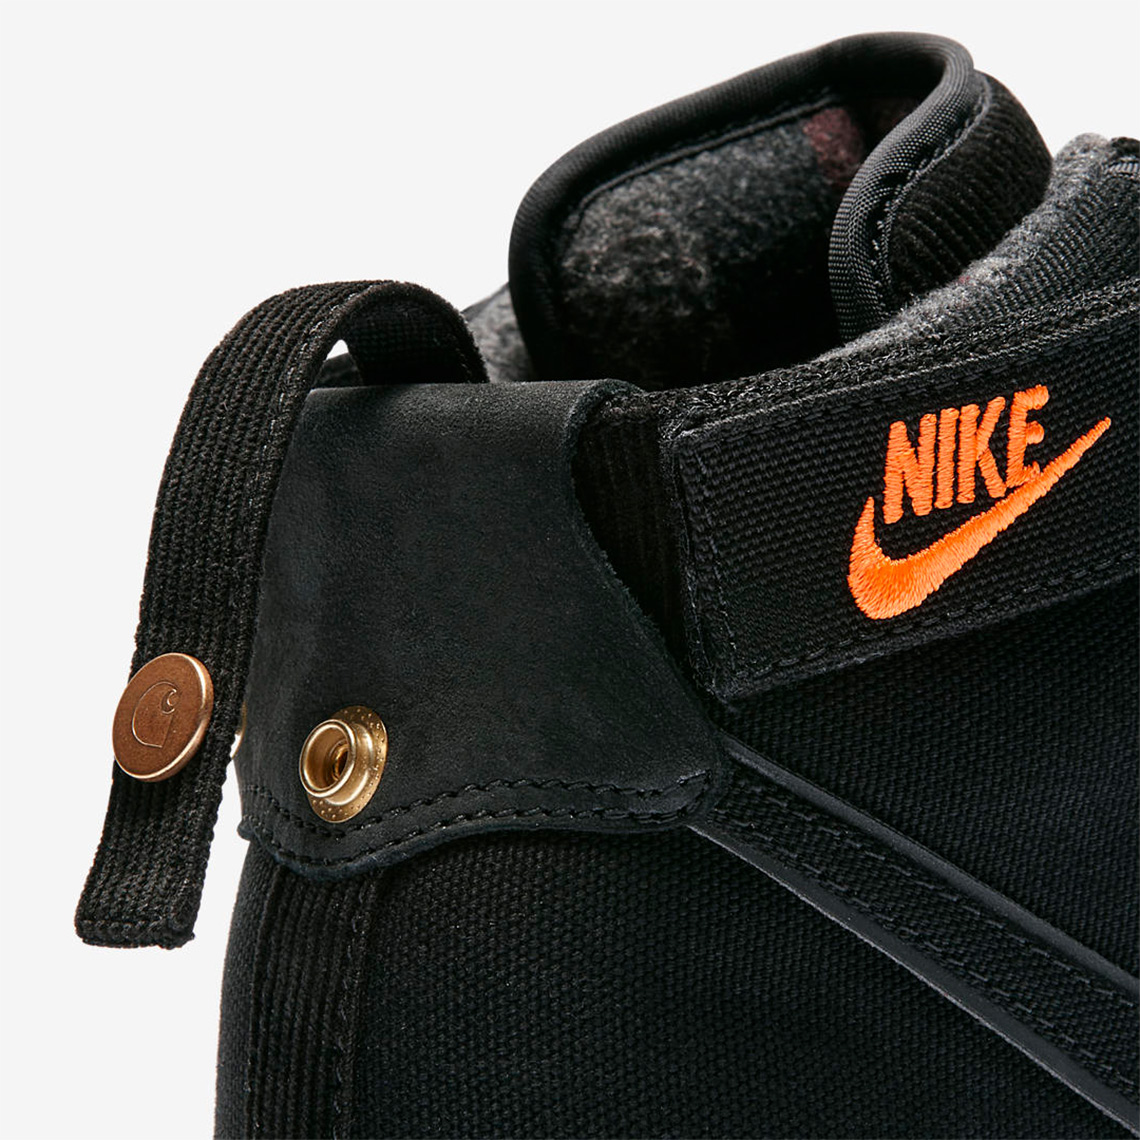 Carhartt Nike Vandal Black Gum Orange 2